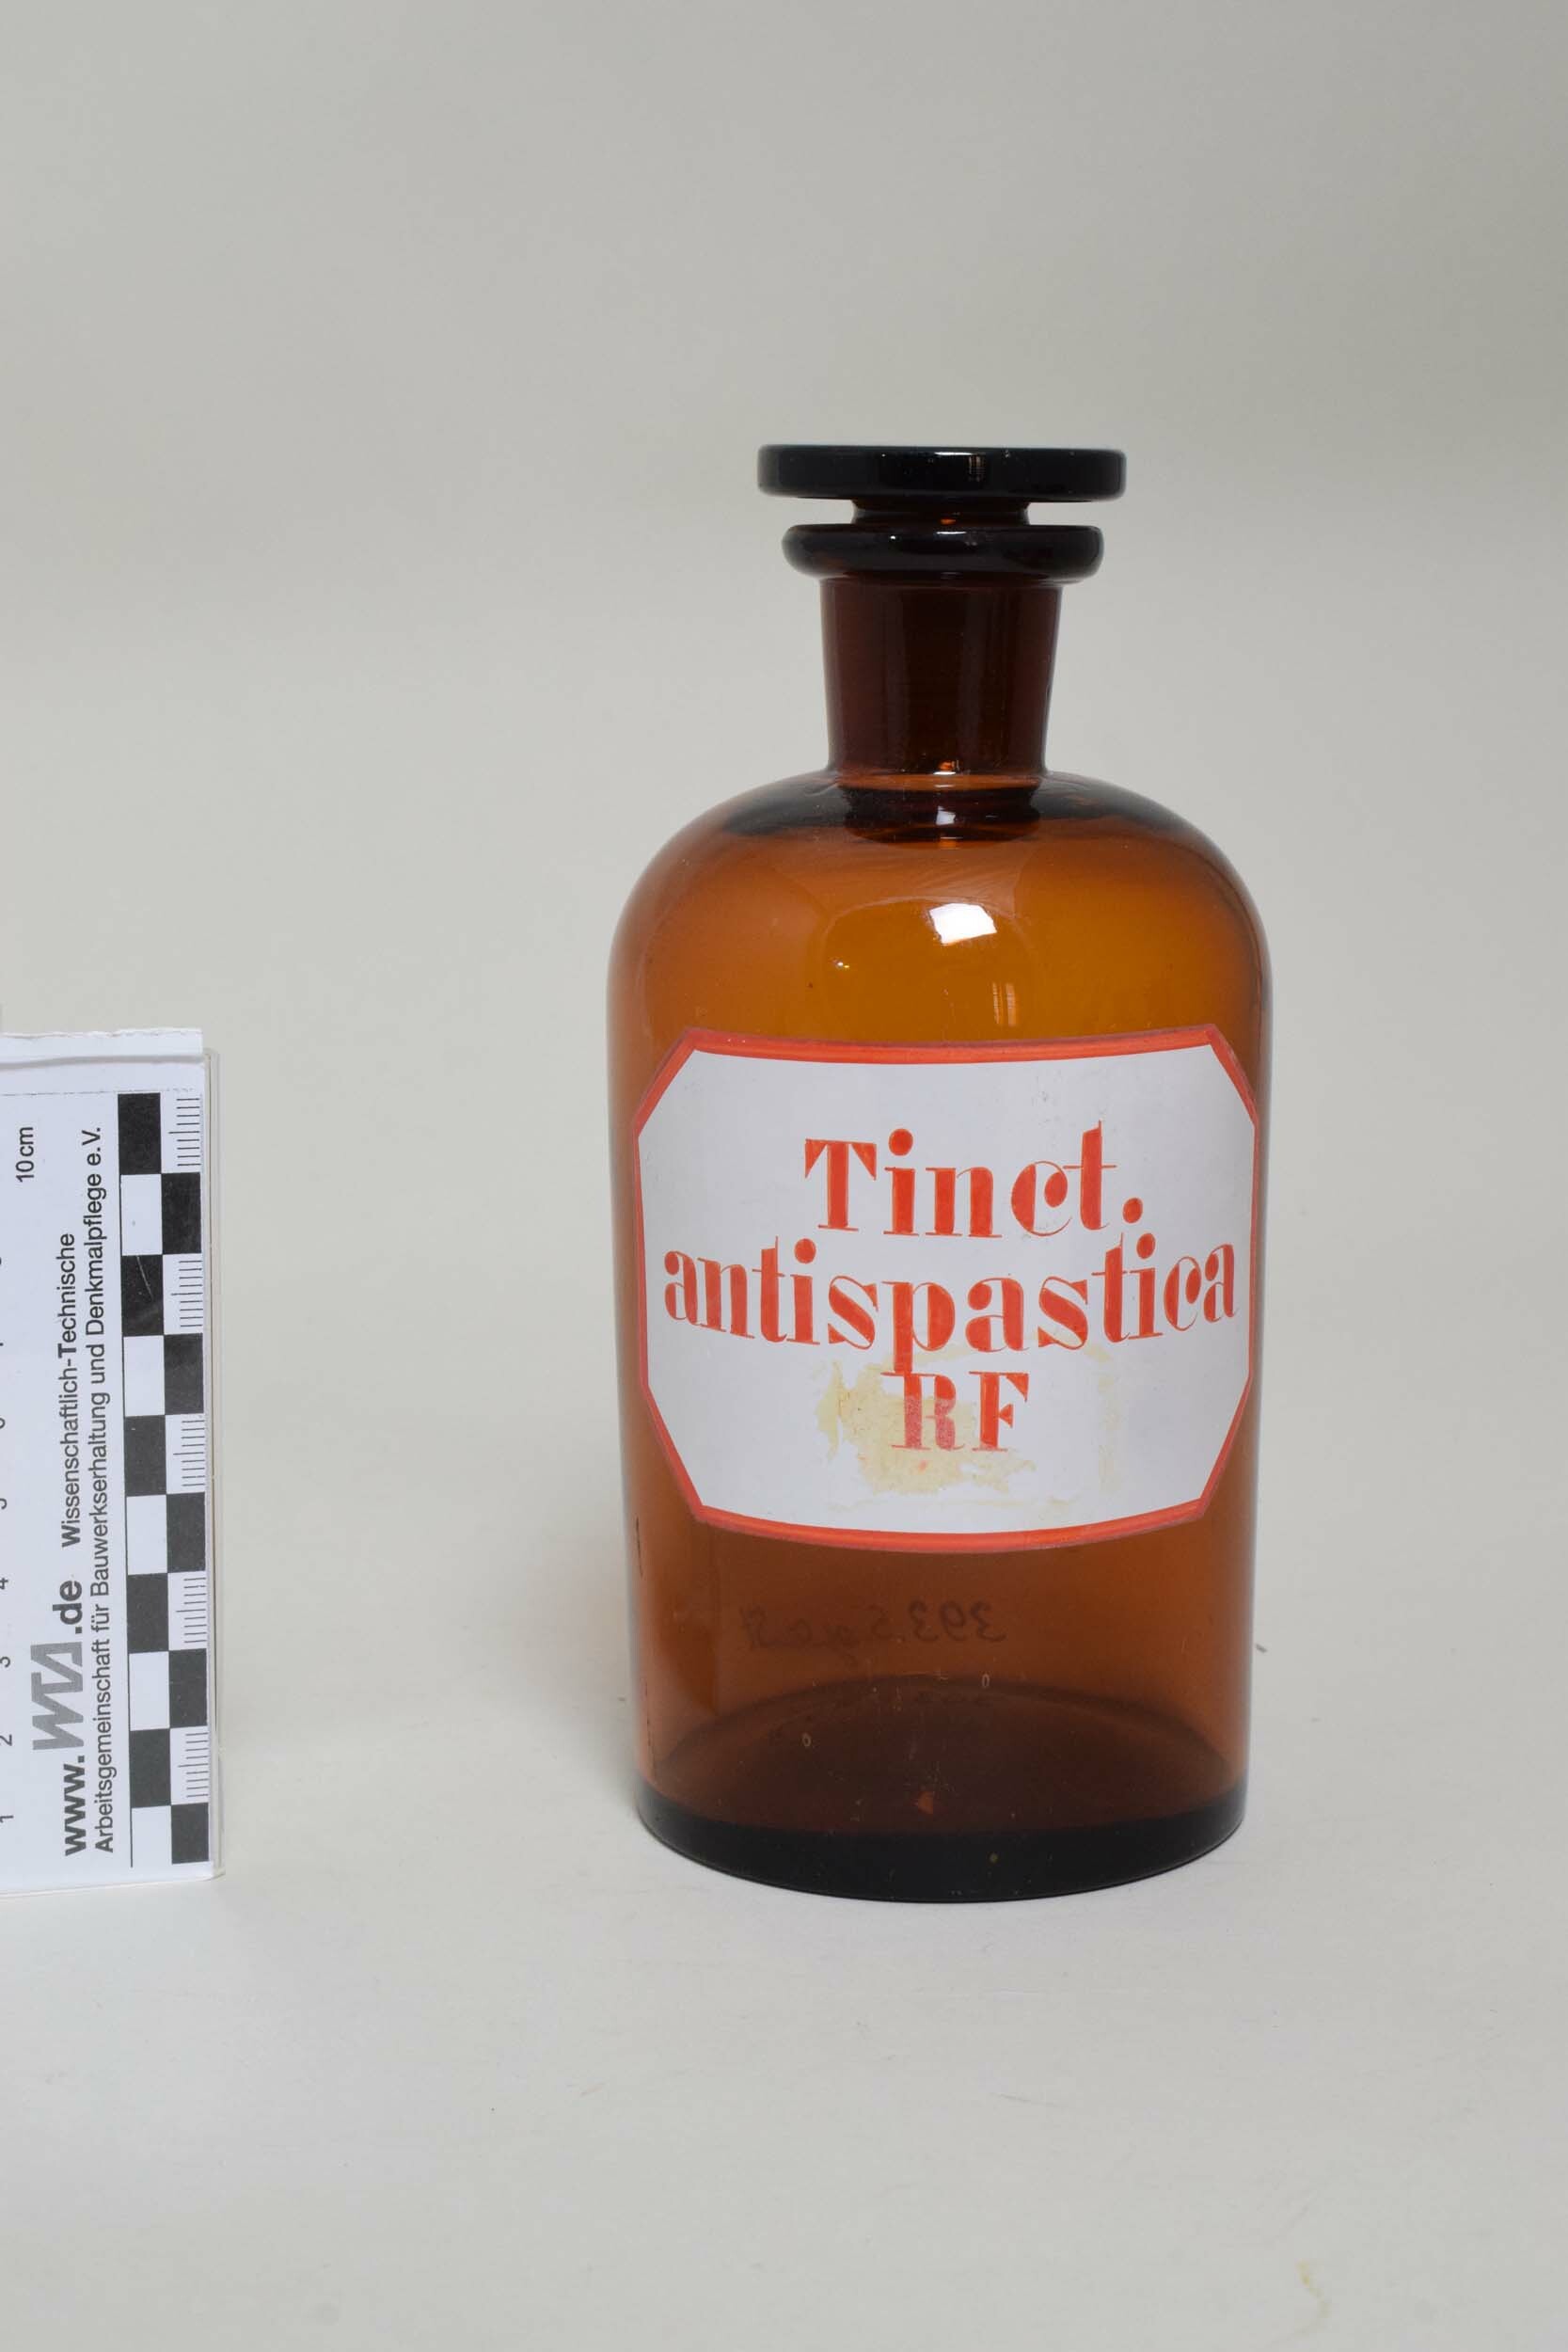 Apothekenflasche "Tinct.antispastica RF" (Heimatmuseum Dohna CC BY-NC-SA)